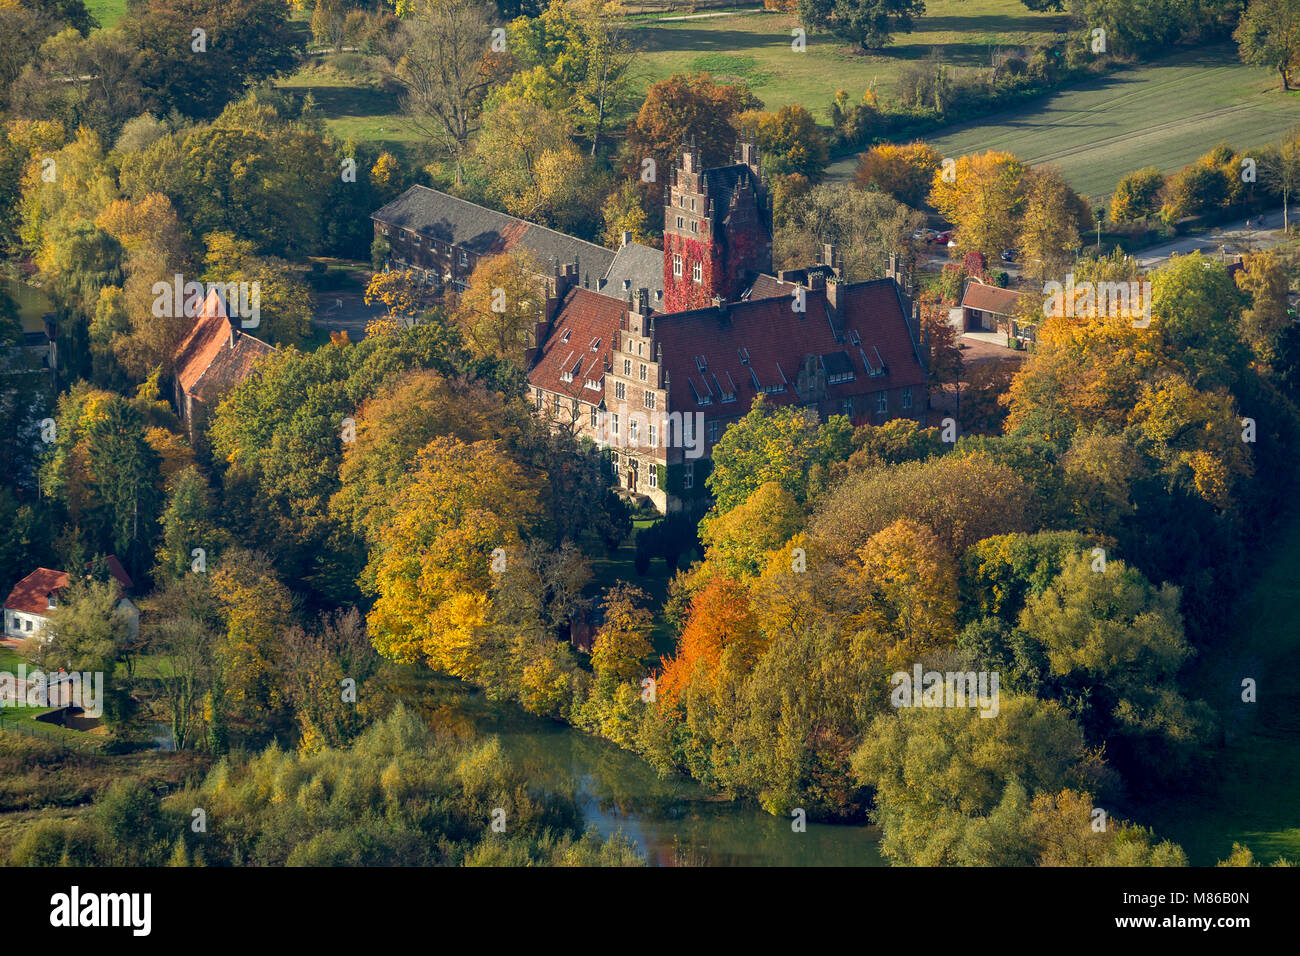 Aerial view, castle Heessen in autumn leaves, boarding school, moated castle, Hamm, Ruhr area, North Rhine-Westphalia, Germany, Europe, birds-eyes vie Stock Photo